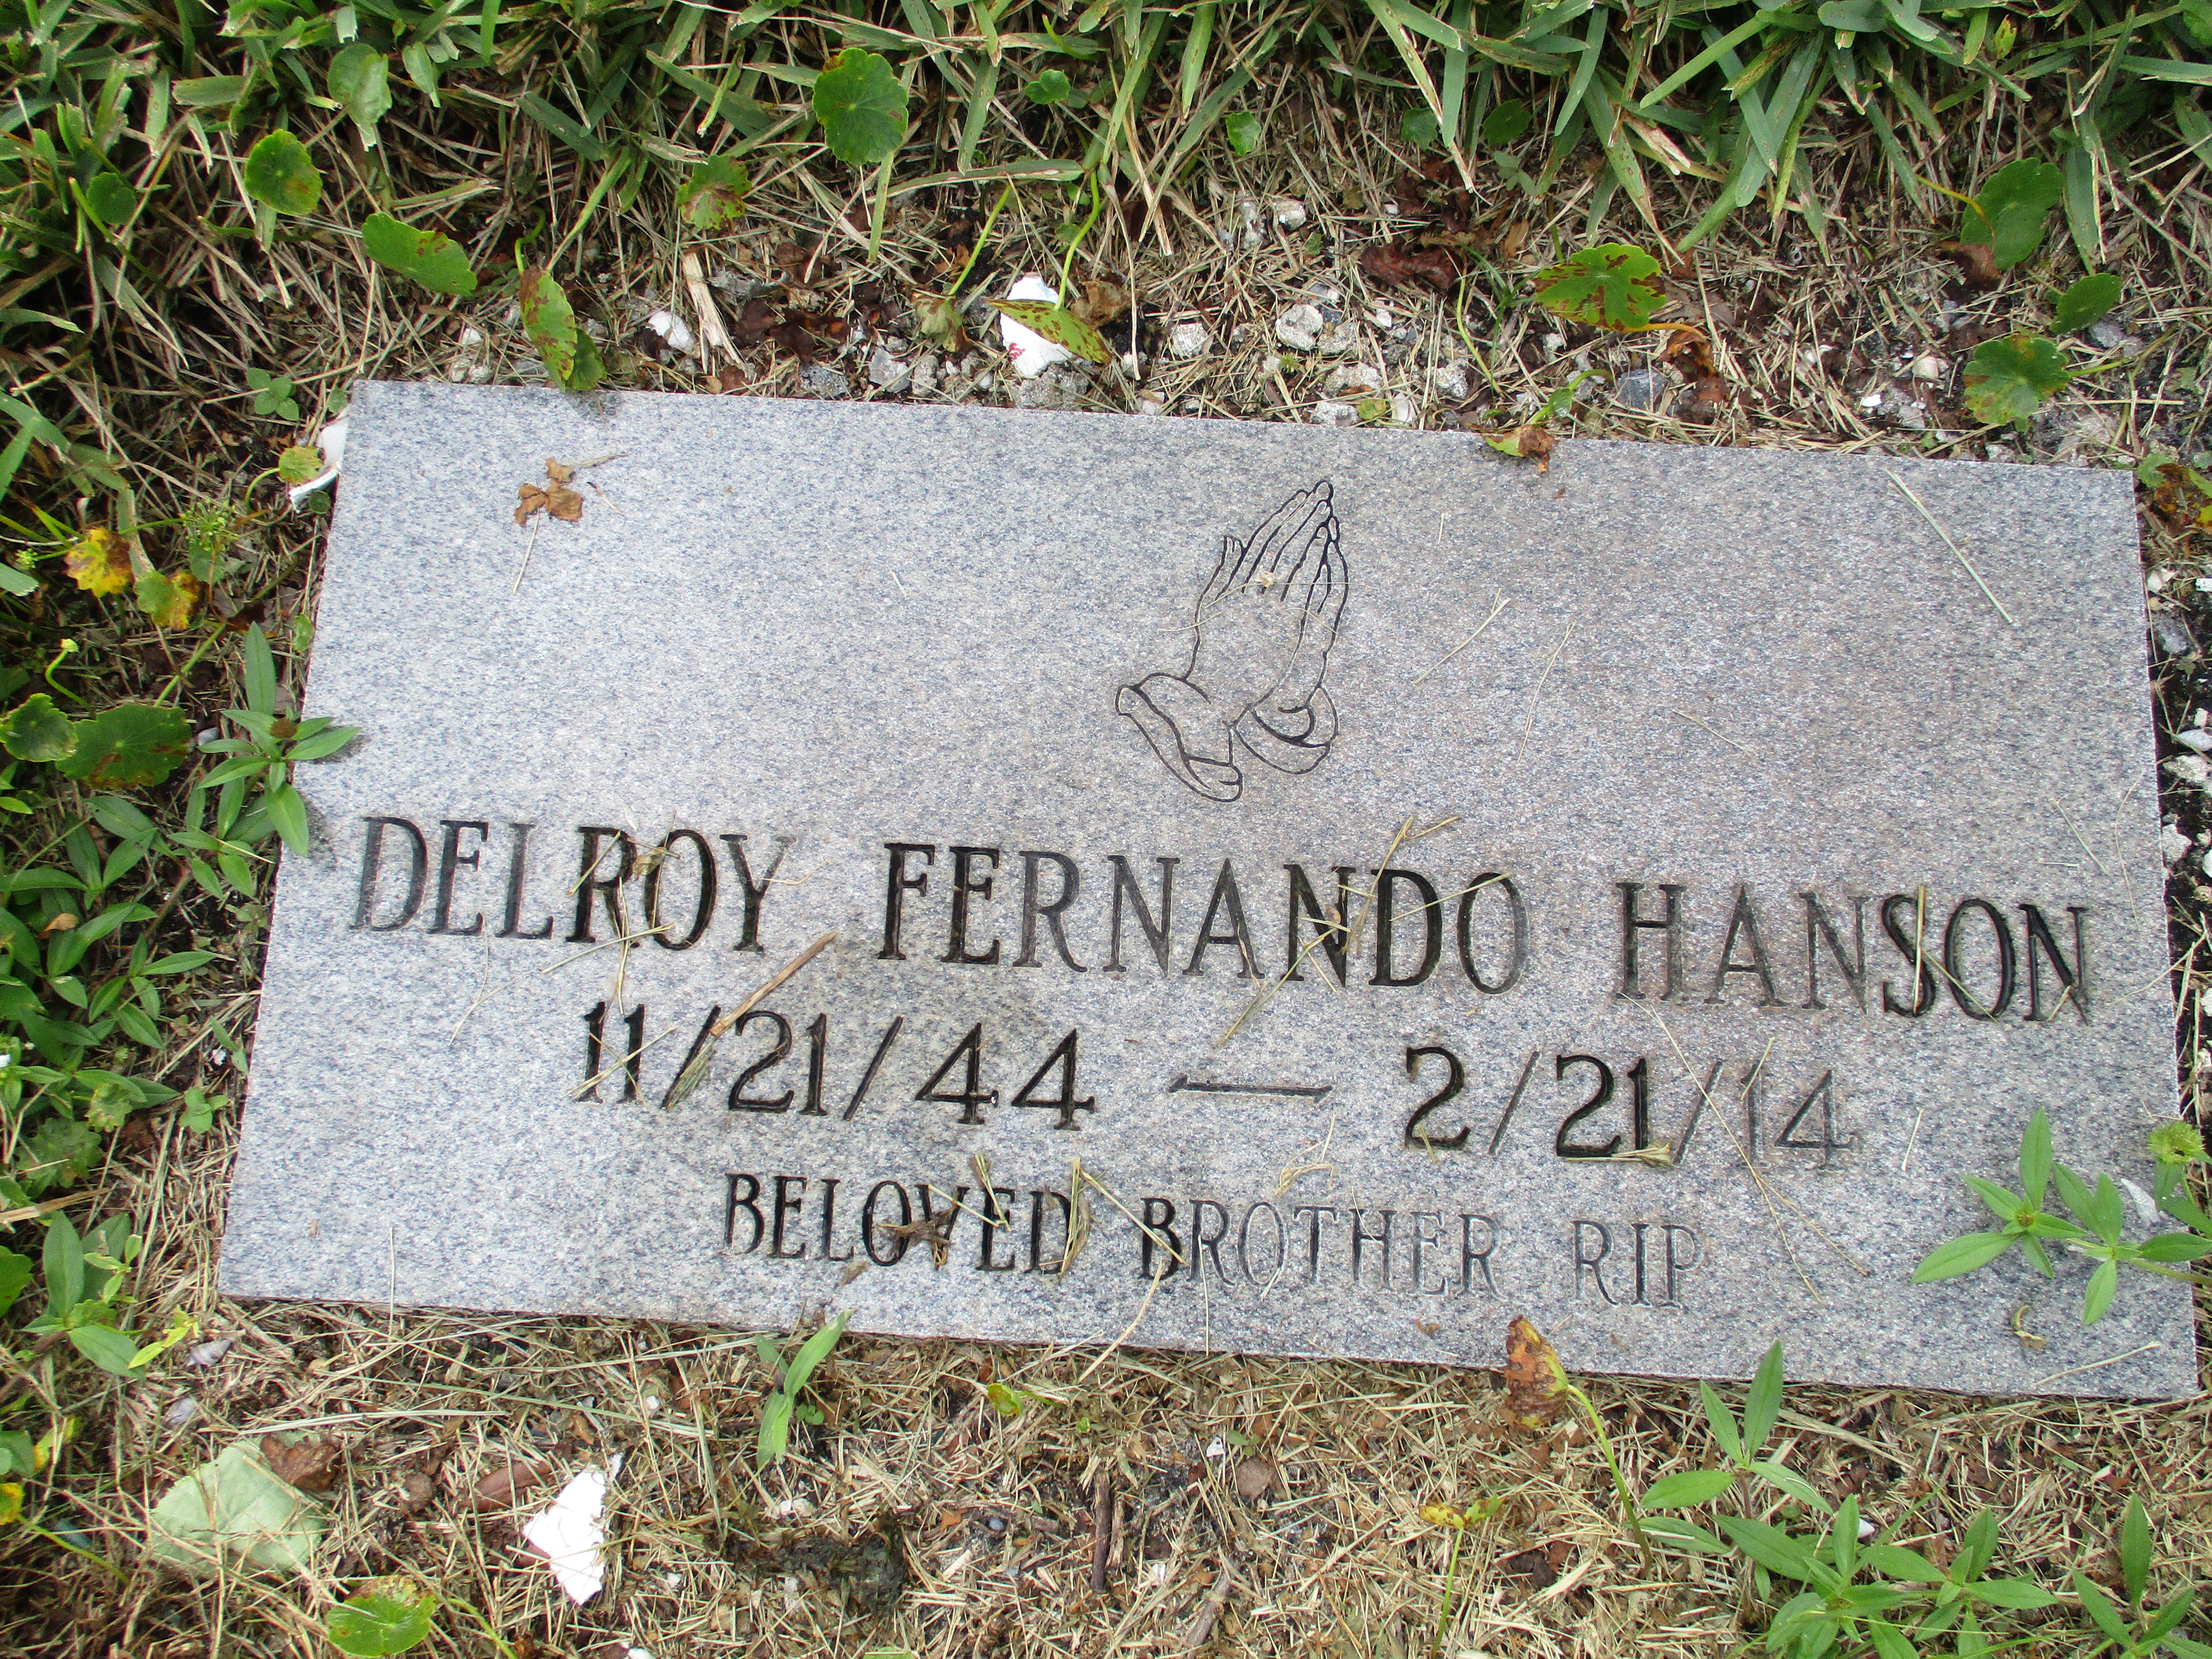 Delroy Fernando Hanson